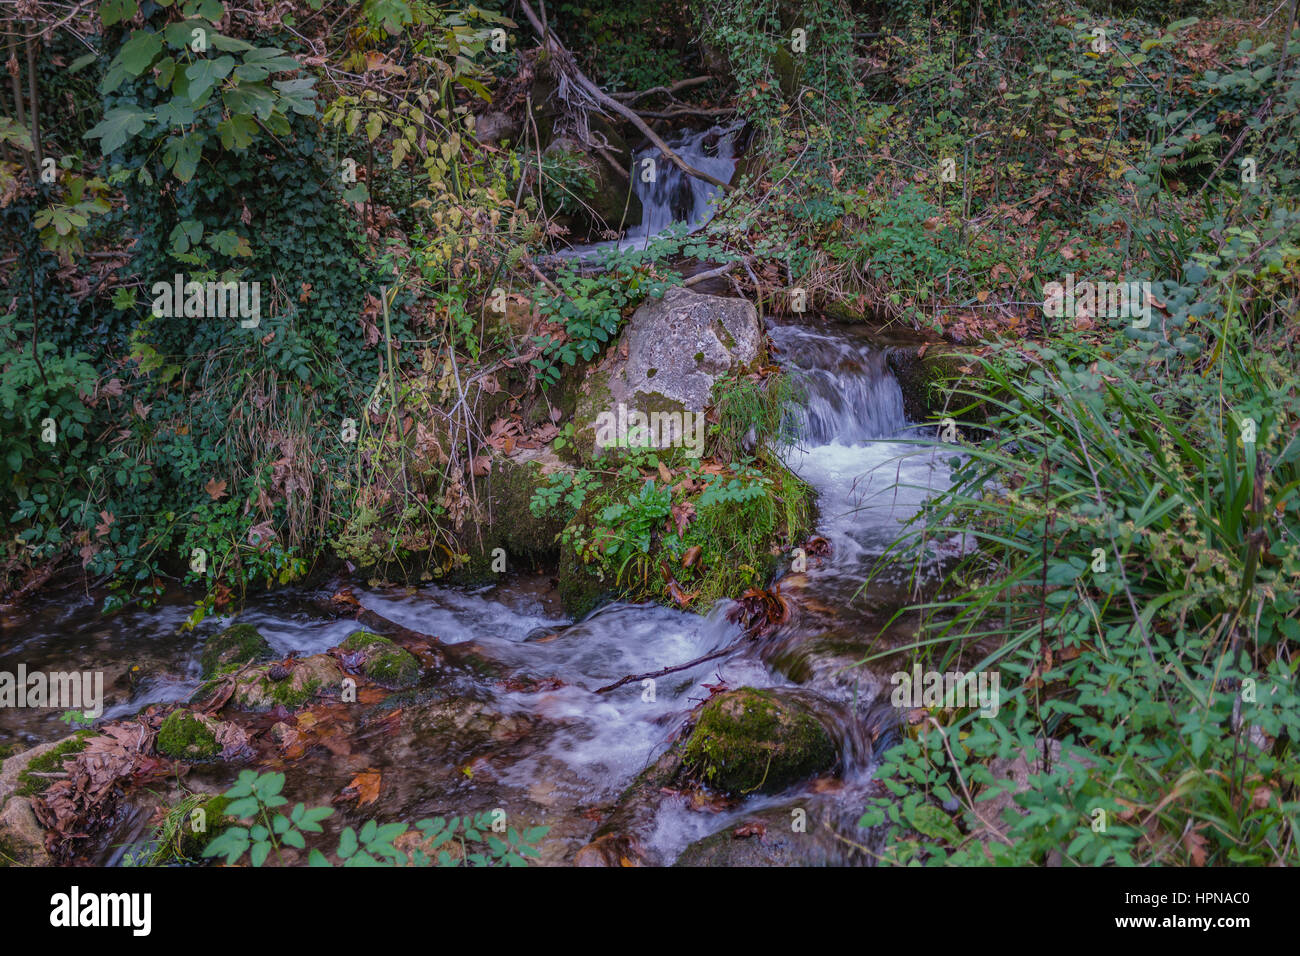 flowing water, stream in the forest, akarsu  dere, landscape stream views, gushing water, stream flowing int he forest, orman dere akarsu Stock Photo